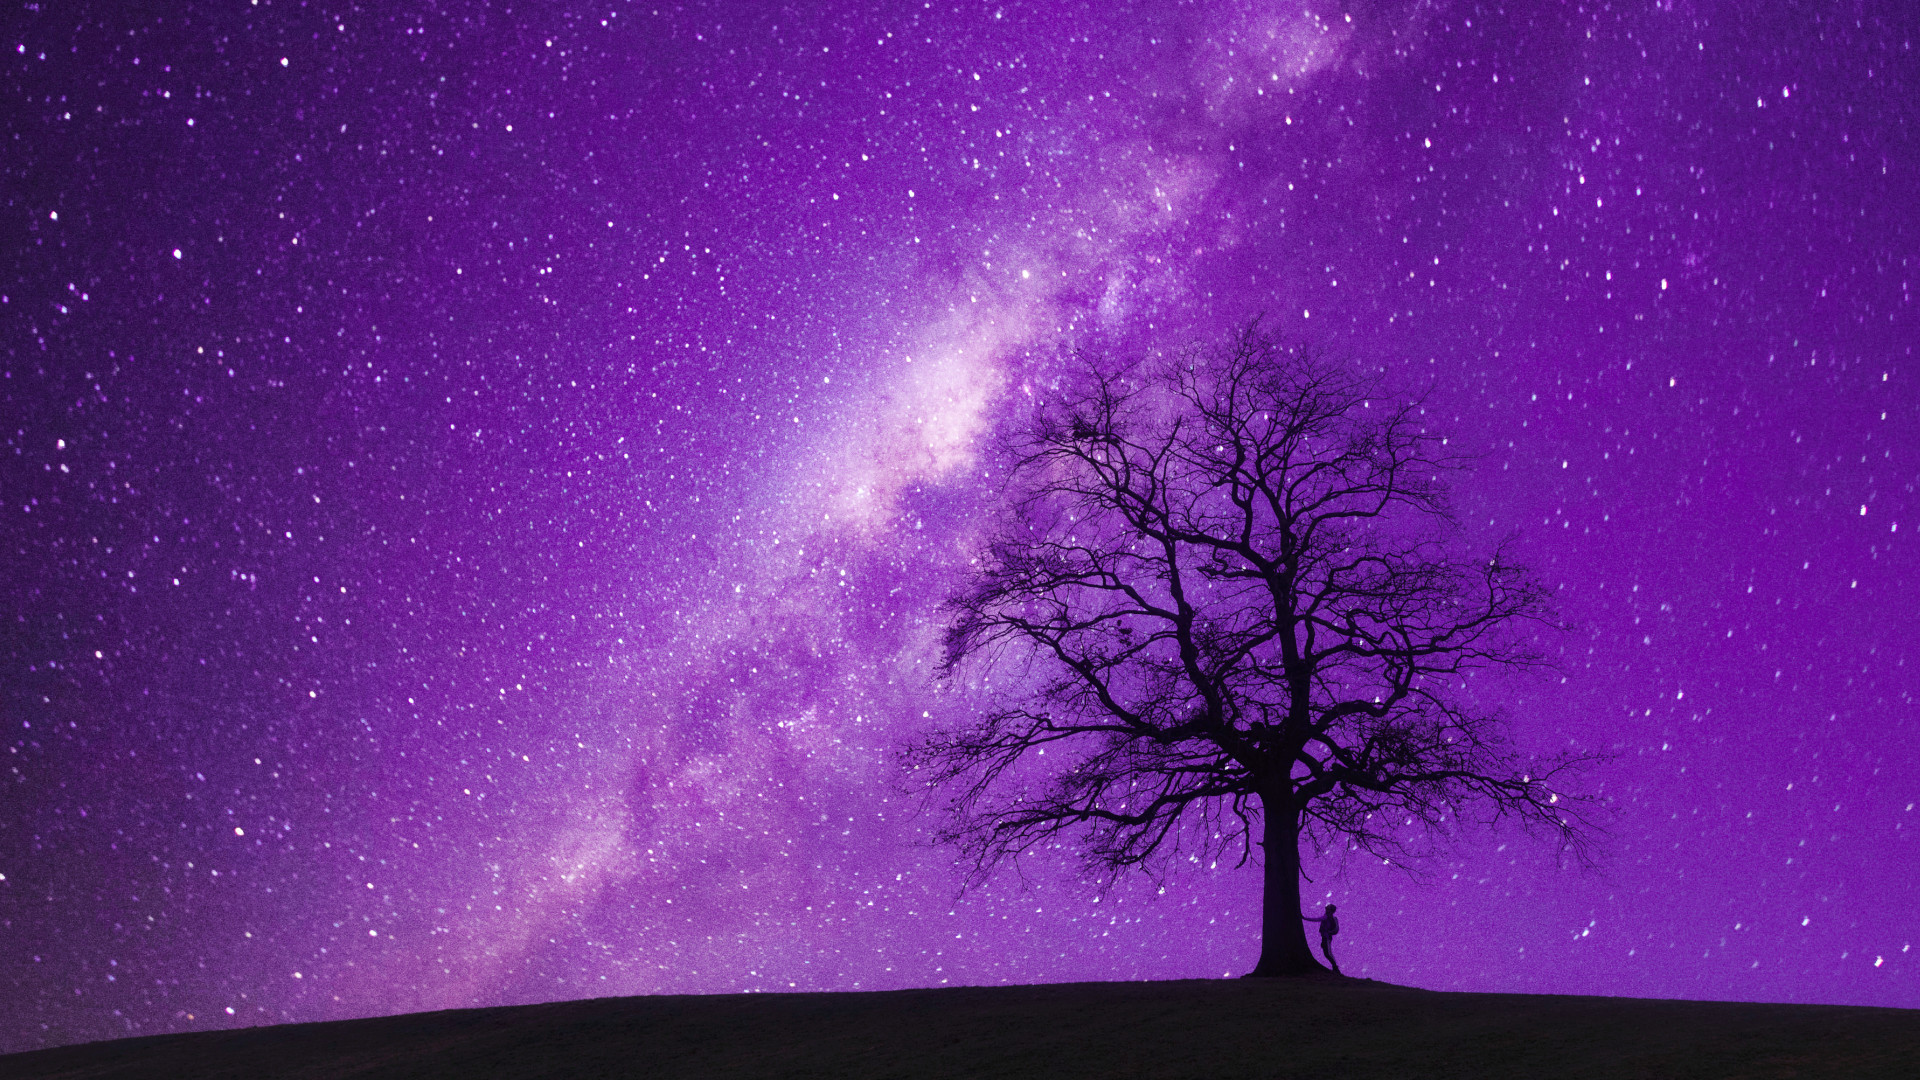 A tree under a purple starry sky